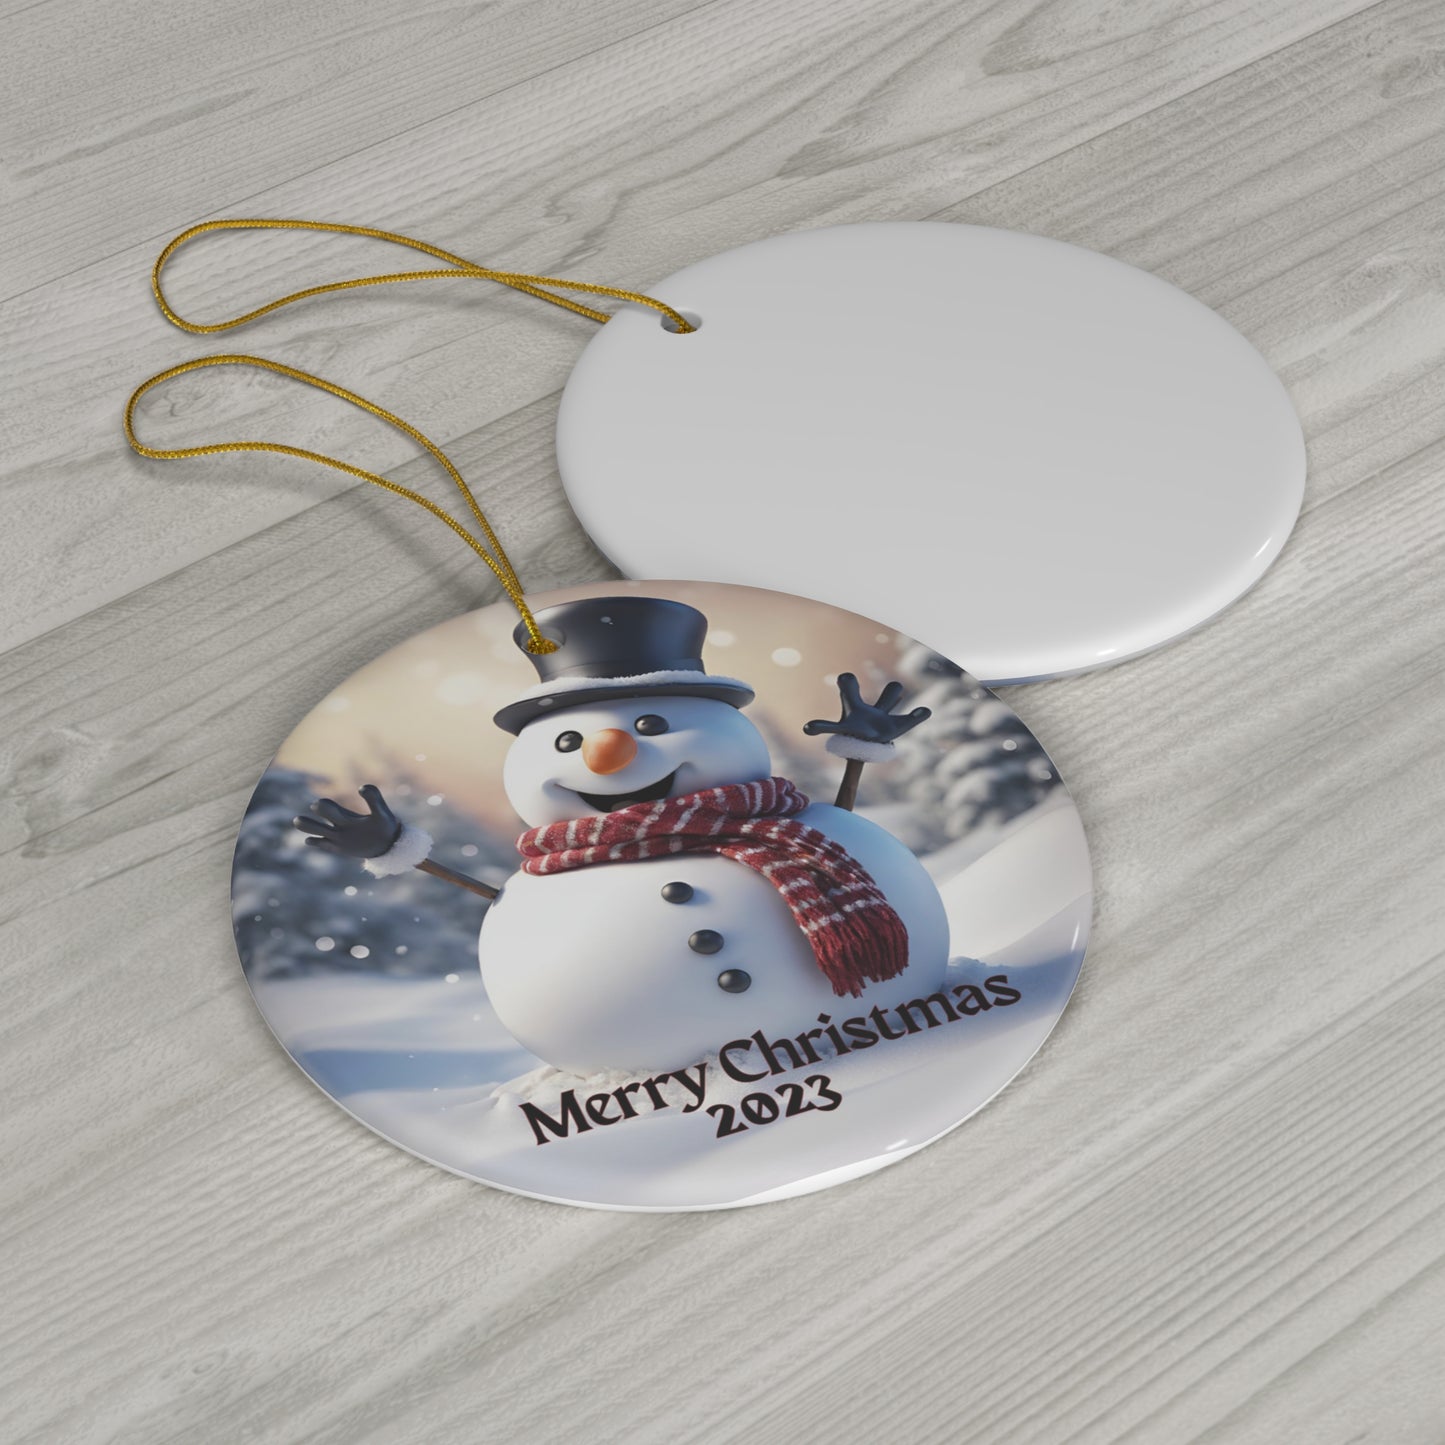 Snowman 2023 Ornament, 2023 Christmas Decoration, Holiday Gift Idea, Heirloom Keepsake, Round Ceramic,